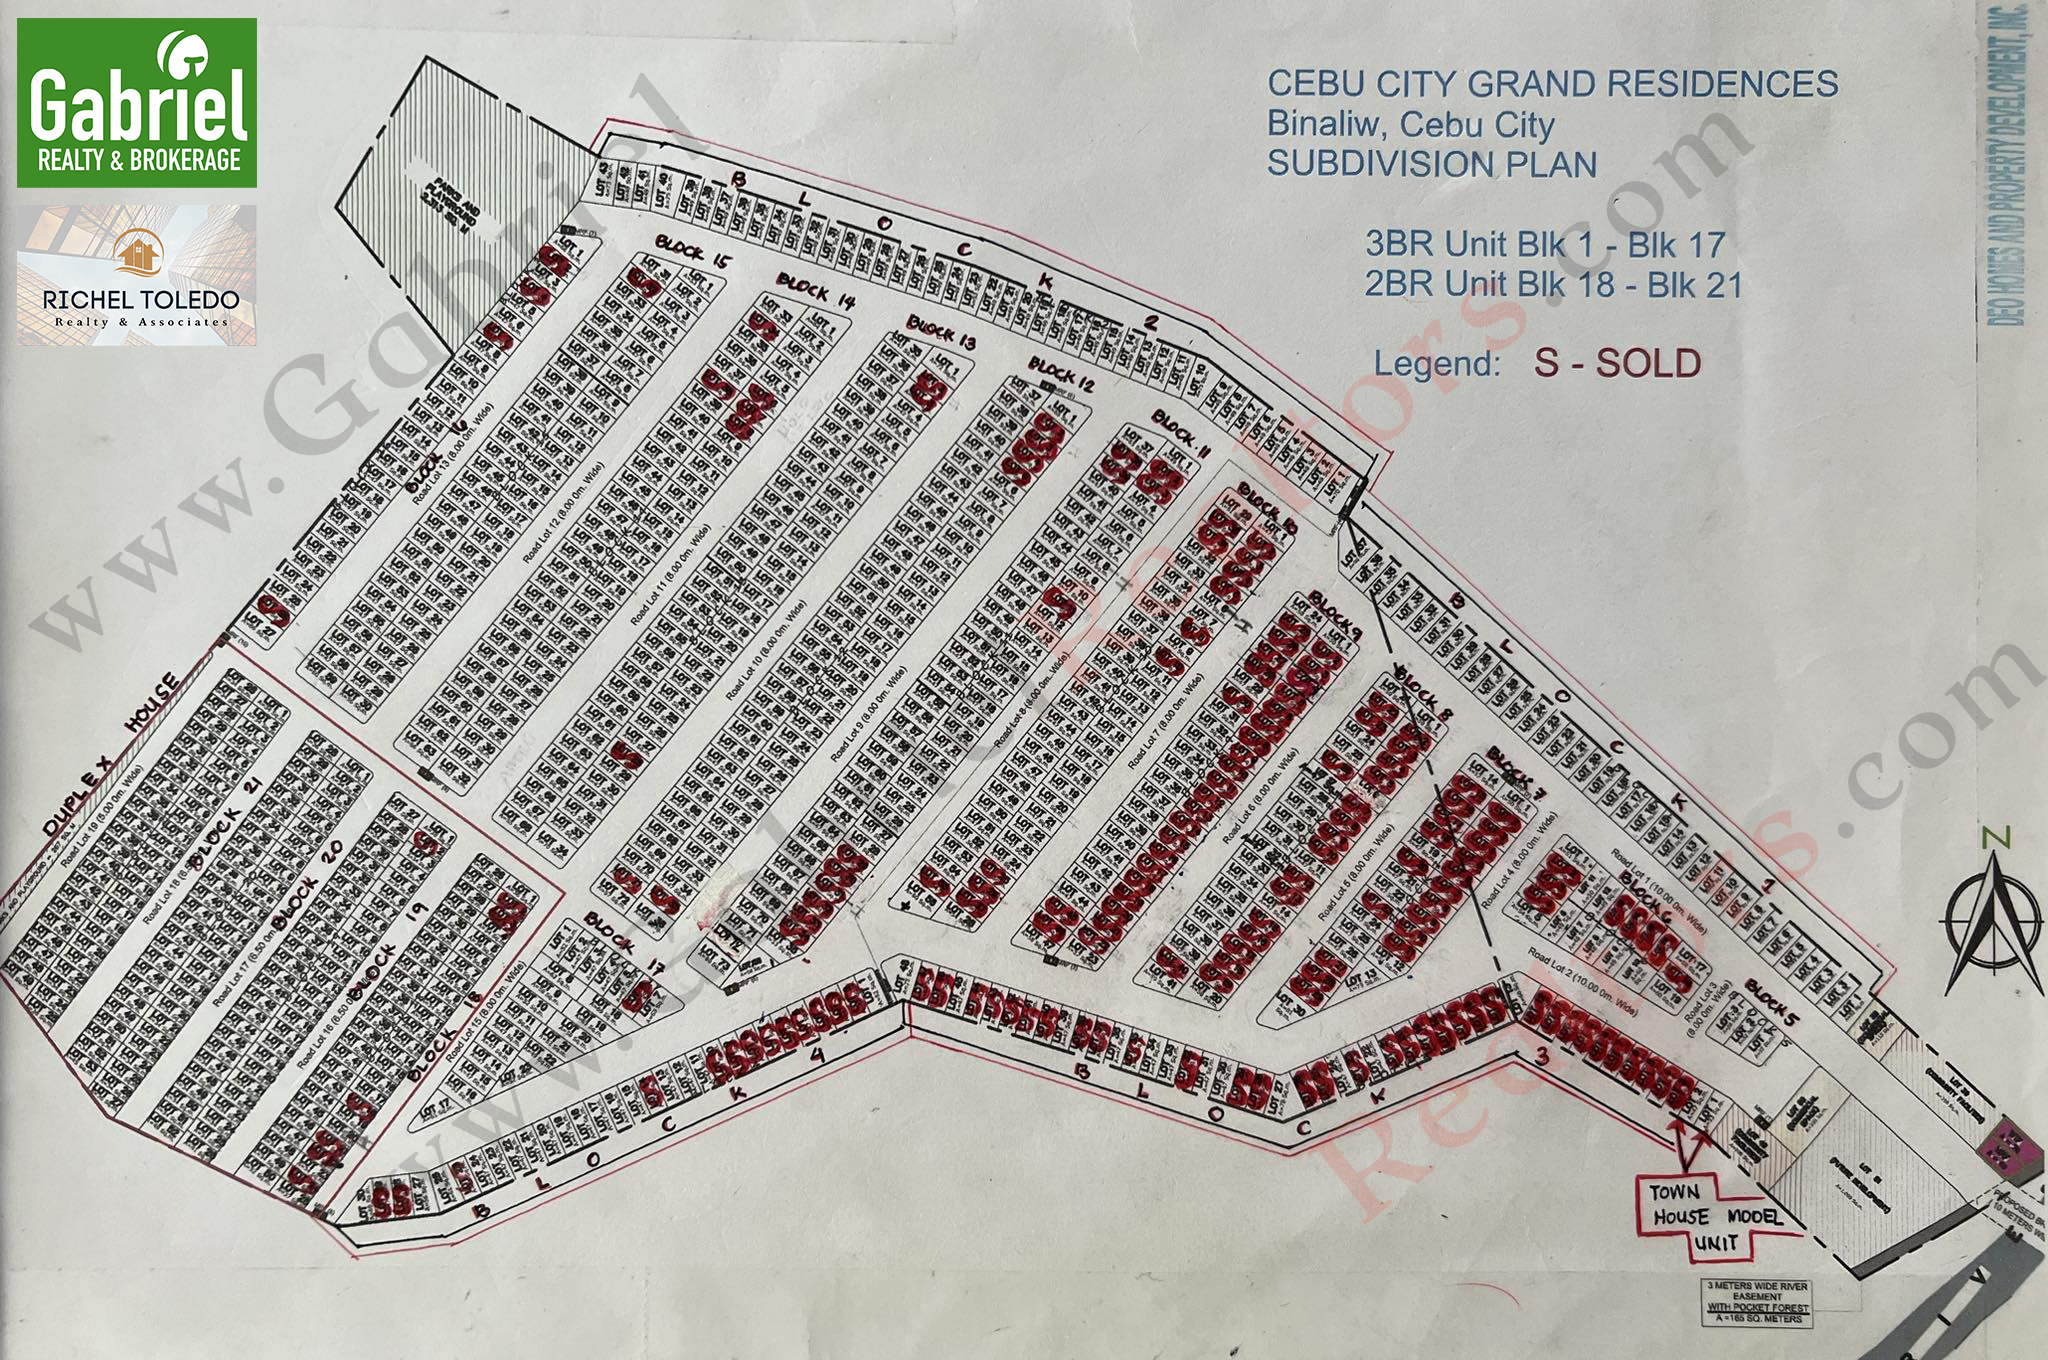 Cebu City Grand Residences Inventory